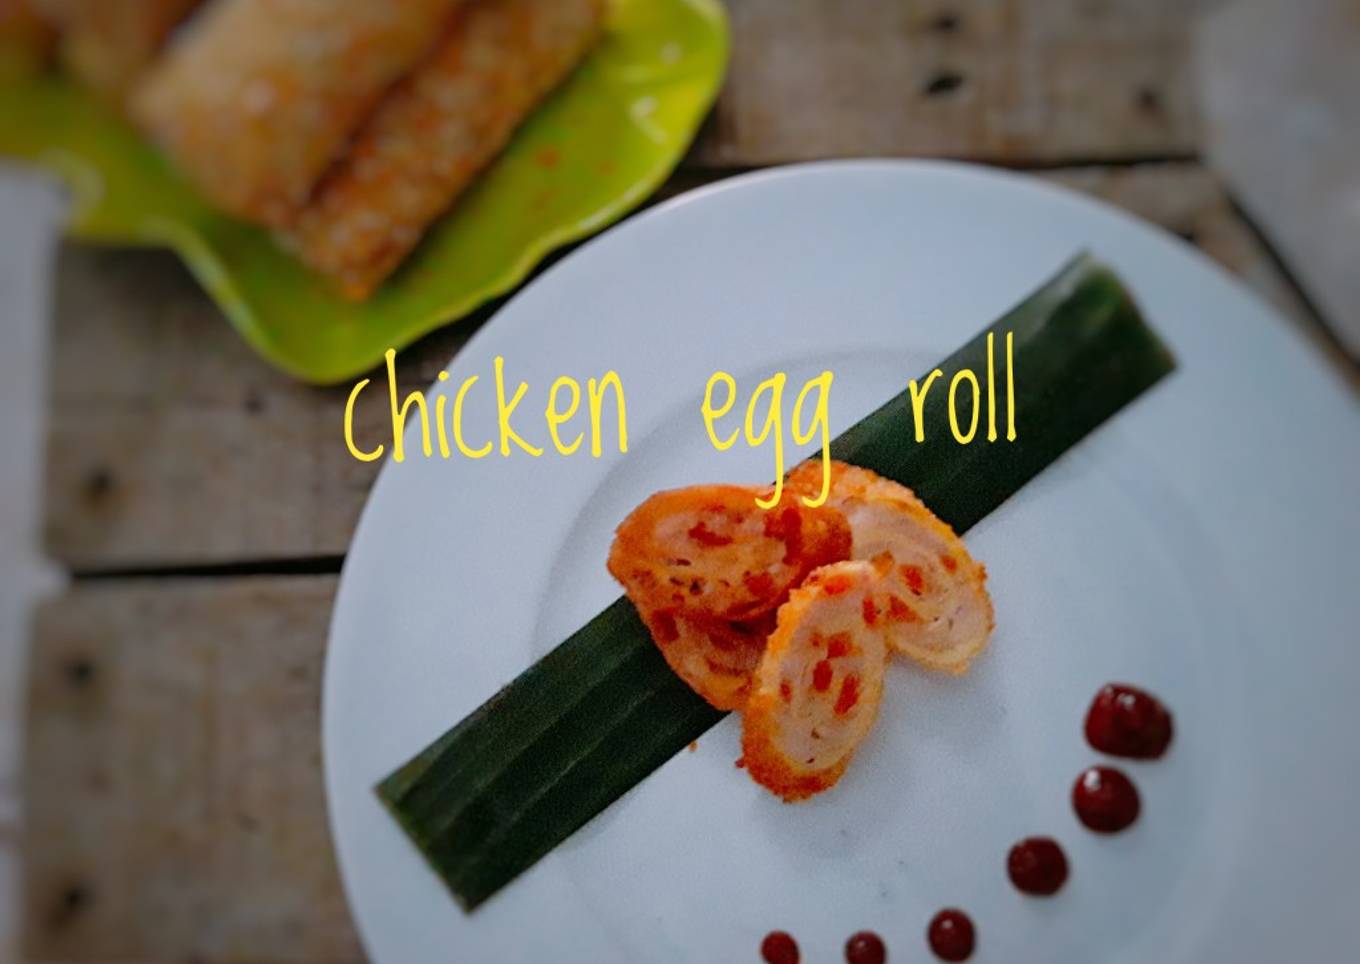 Chicken egg roll (+udang)